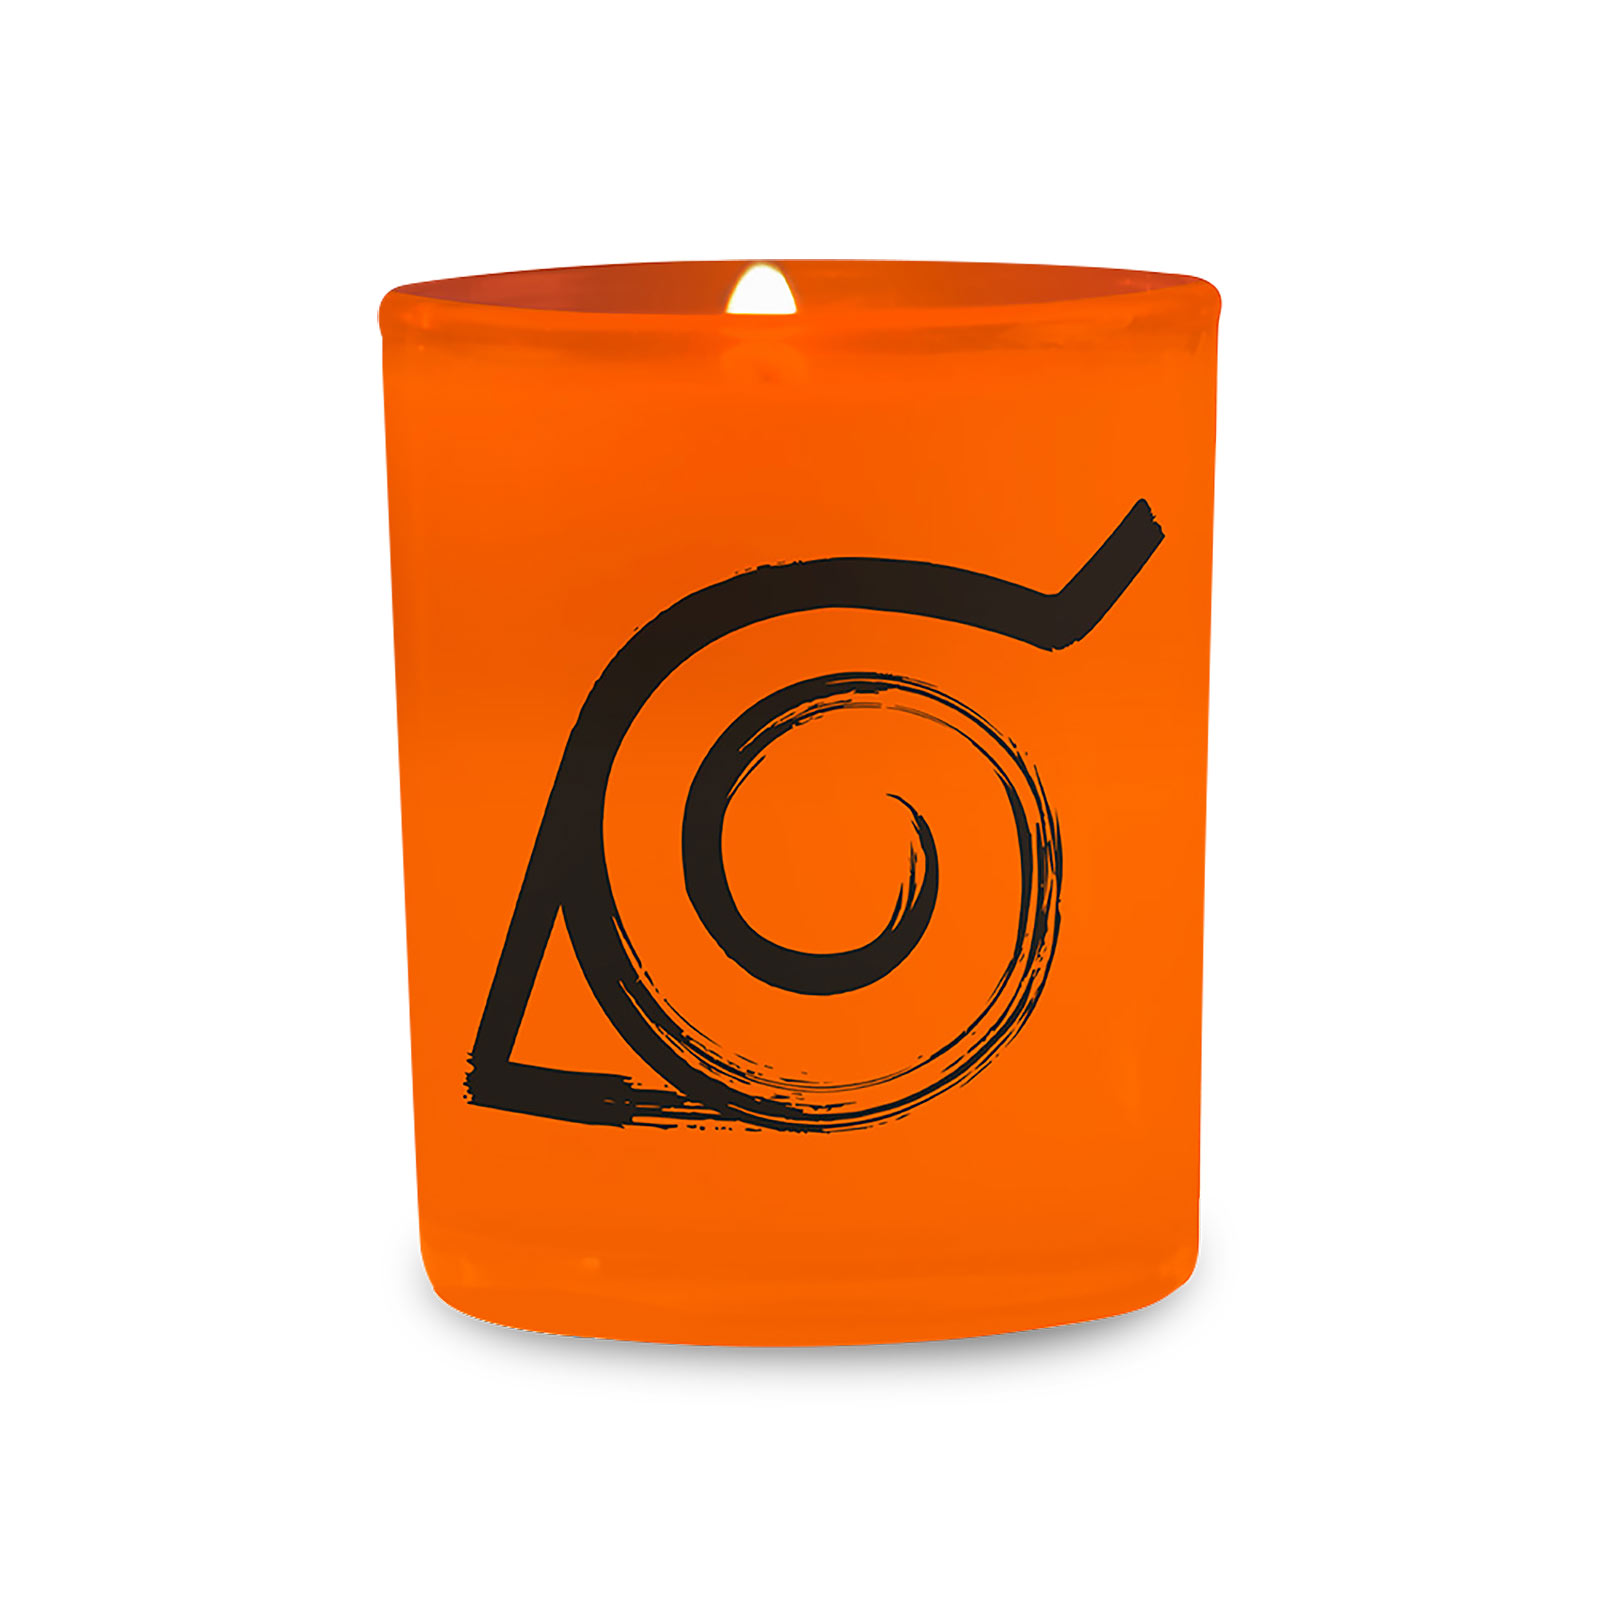 Naruto Shippuden - Konoha Symbol Candle in Glass